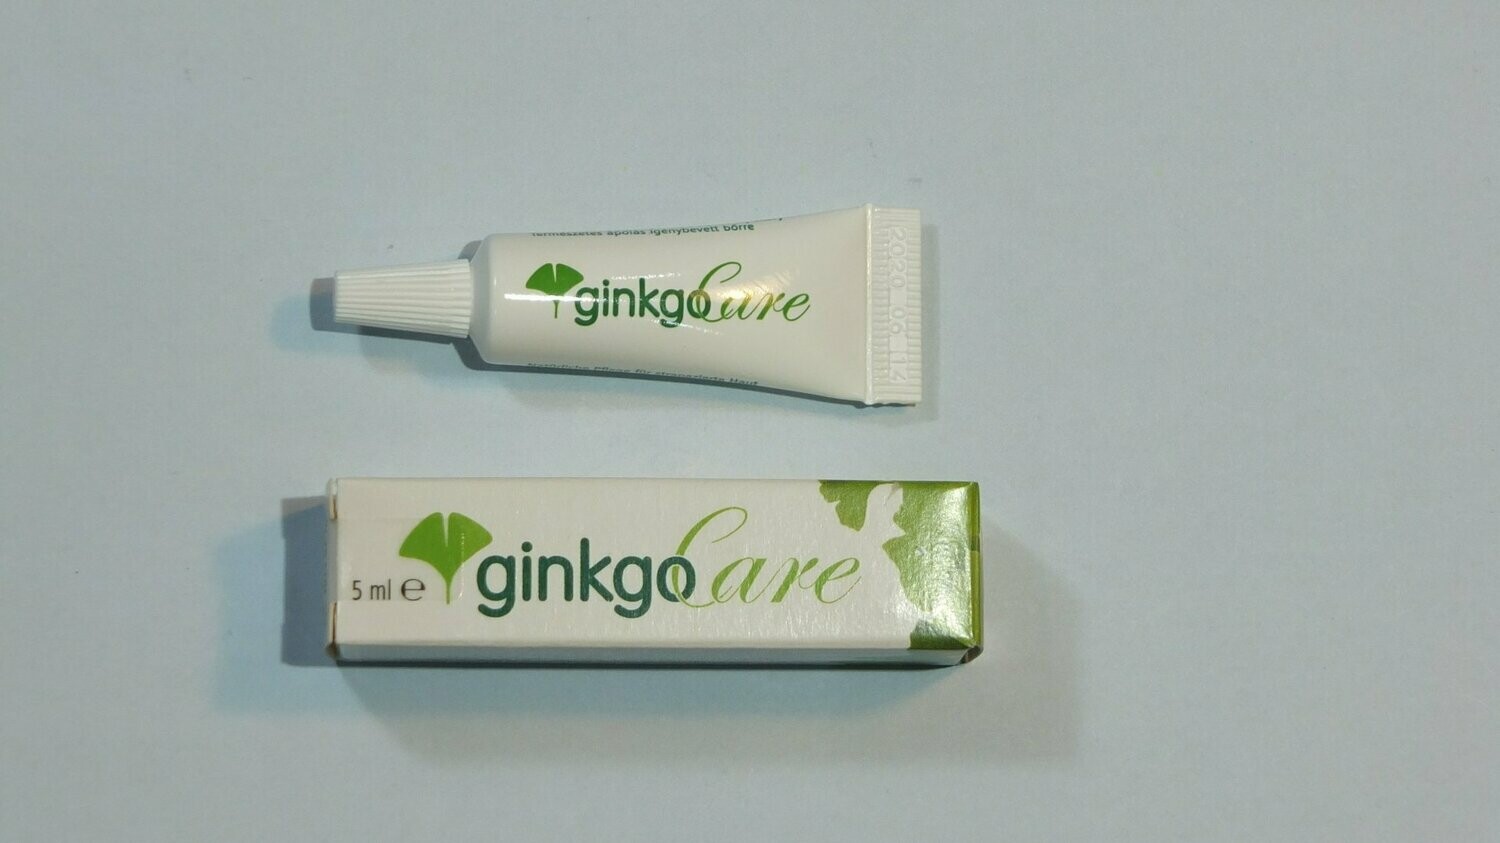 Ginkgo Care Cream